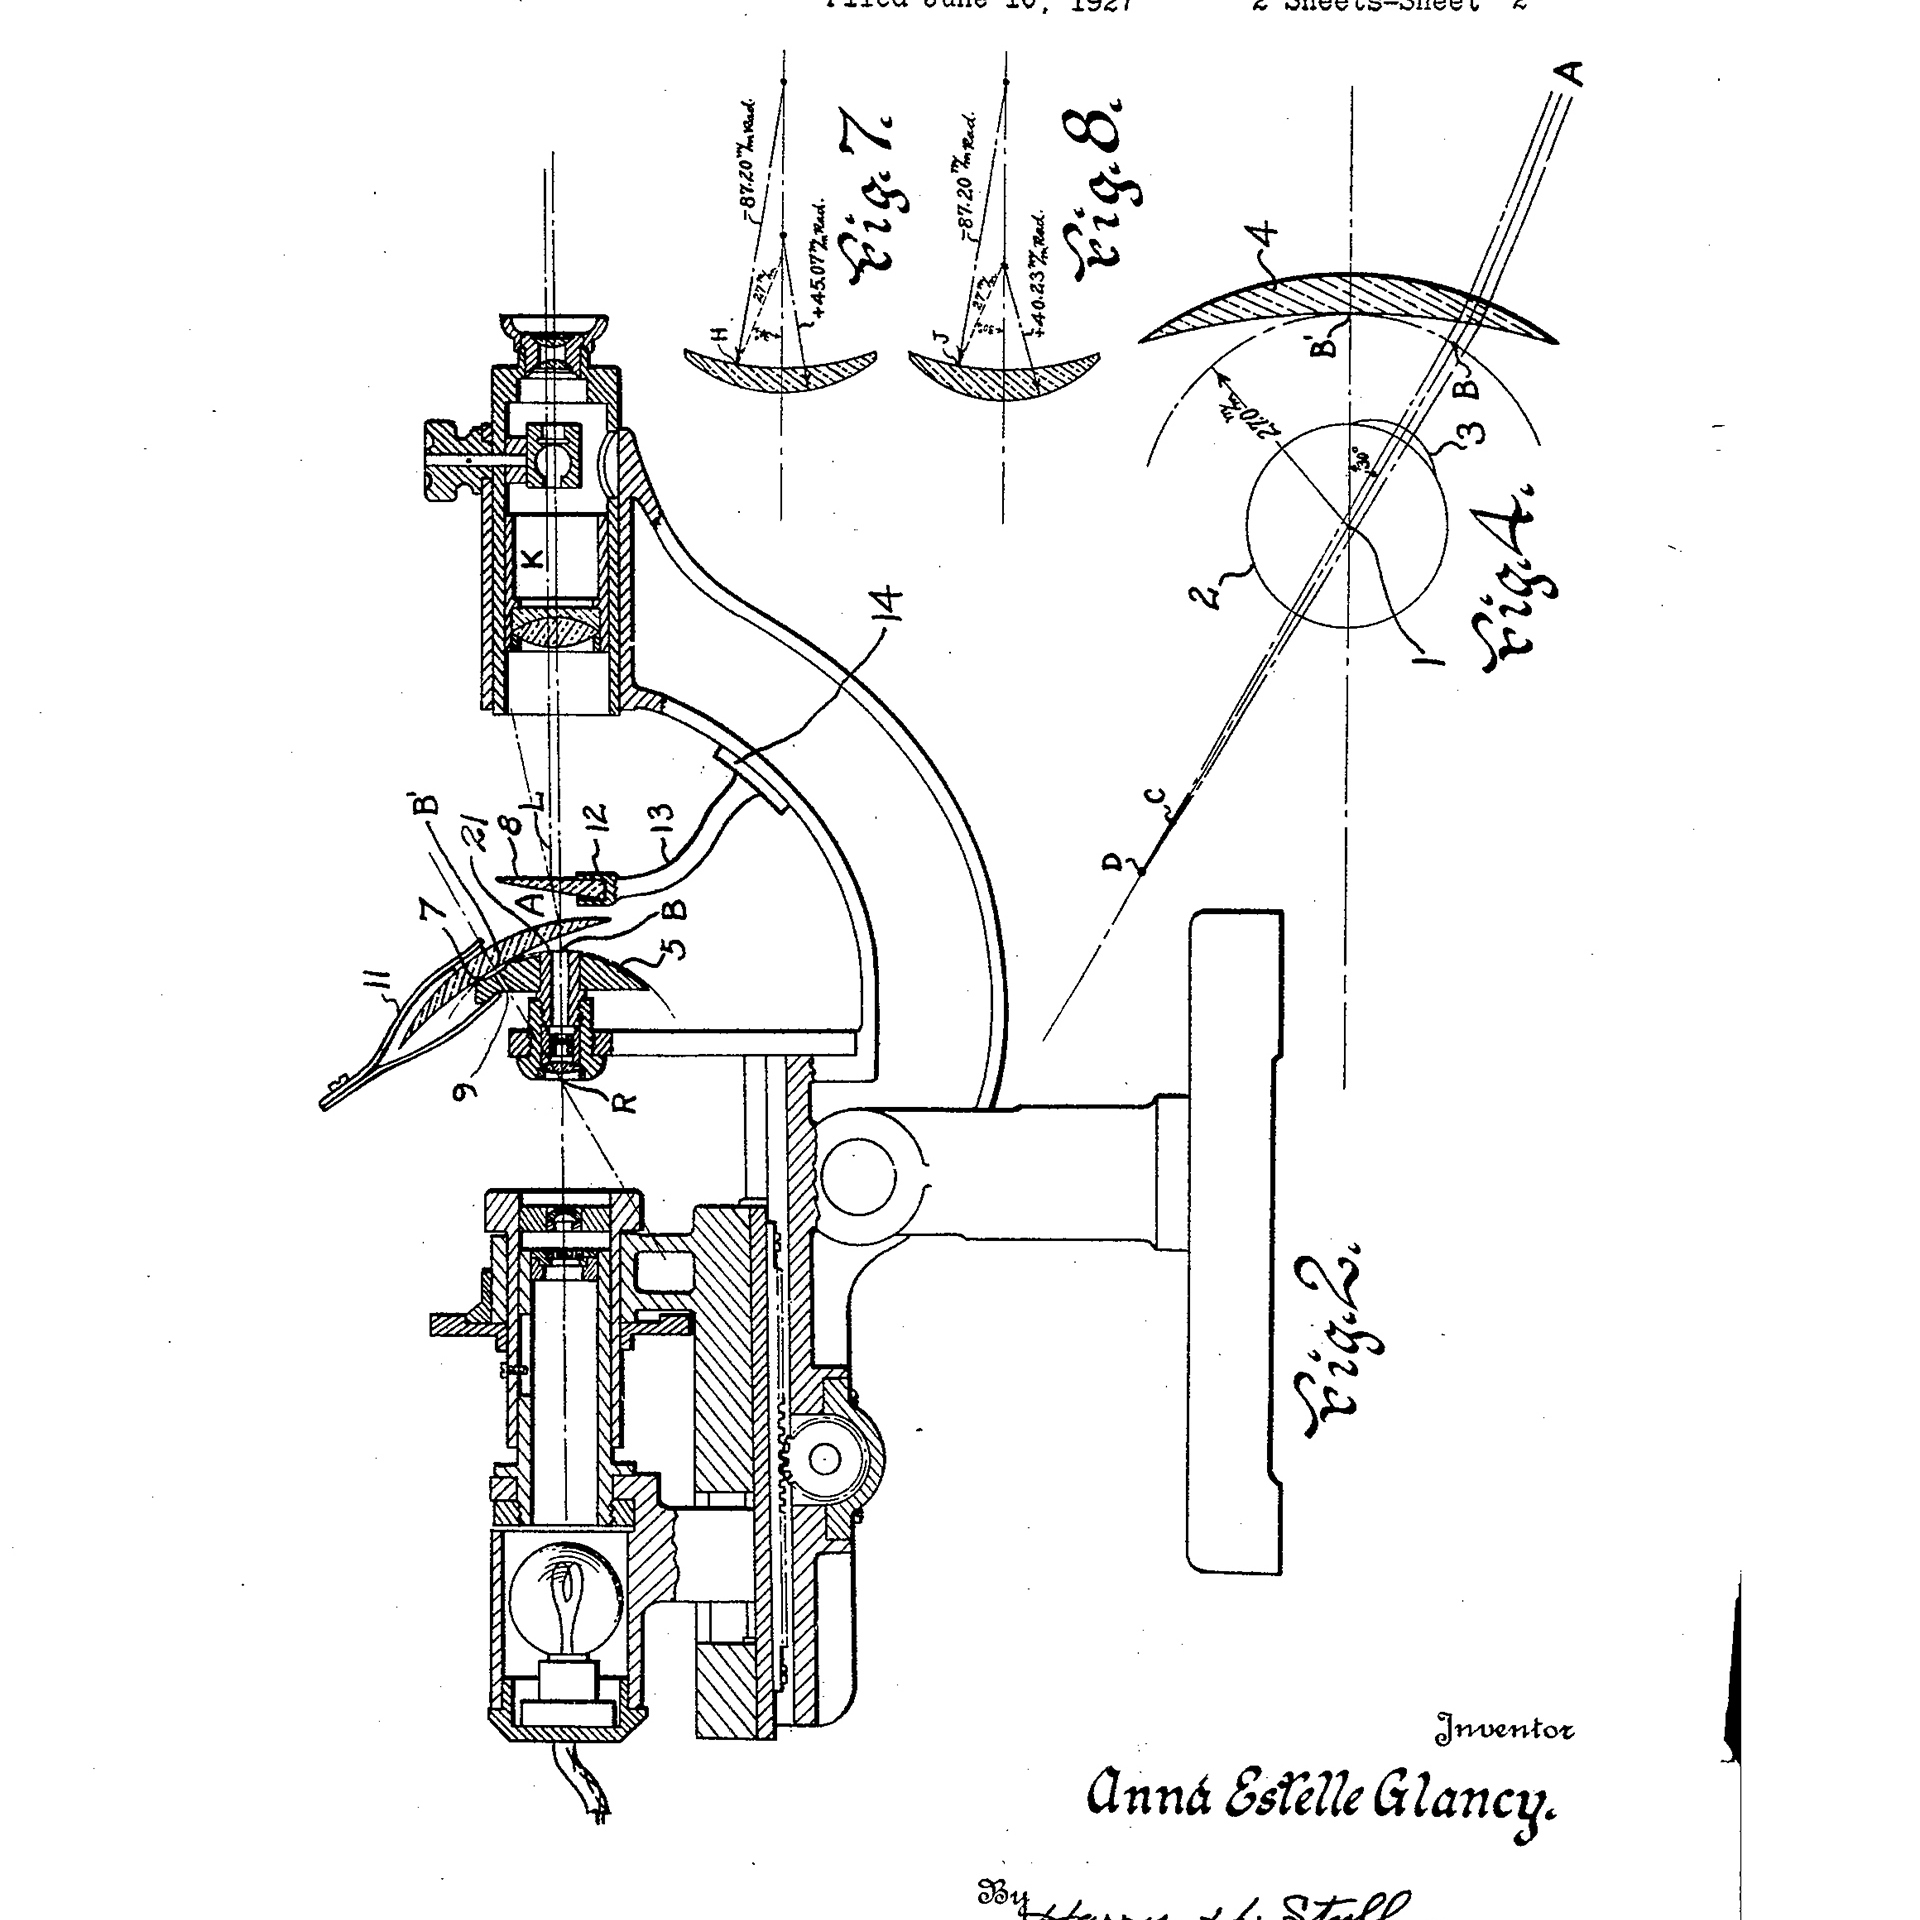 1927 Lens Testing Instrument Patent